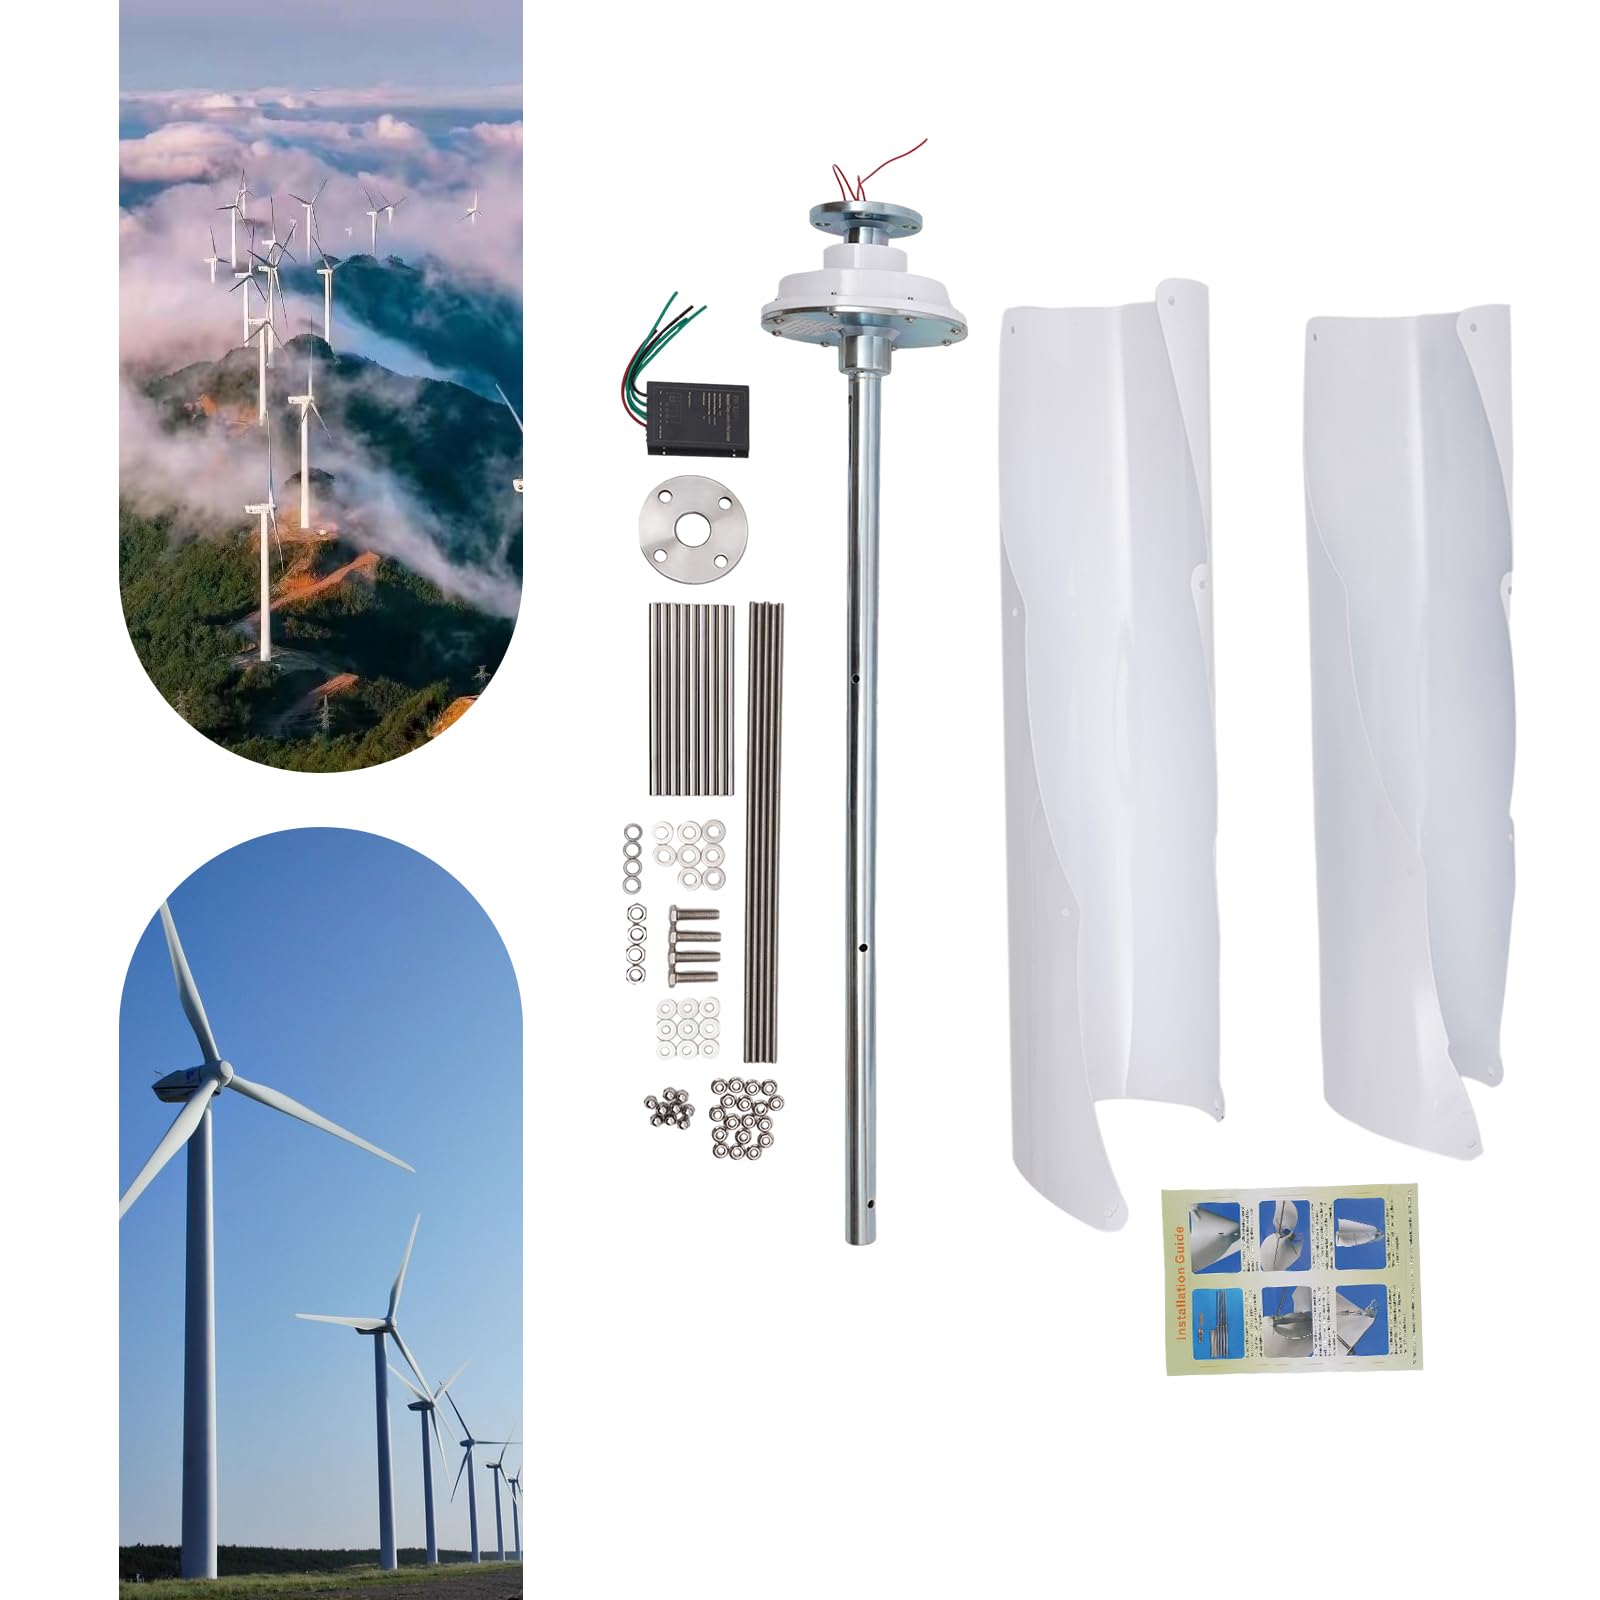 DOONARCES 400W 12V Vertical Wind Turbine Generator Kit, Helix Maglev Axis Wind Turbine Generator with 2-Blades Wind Power Generator Kit with PWM Controller Windmill Generator System, White (12V)